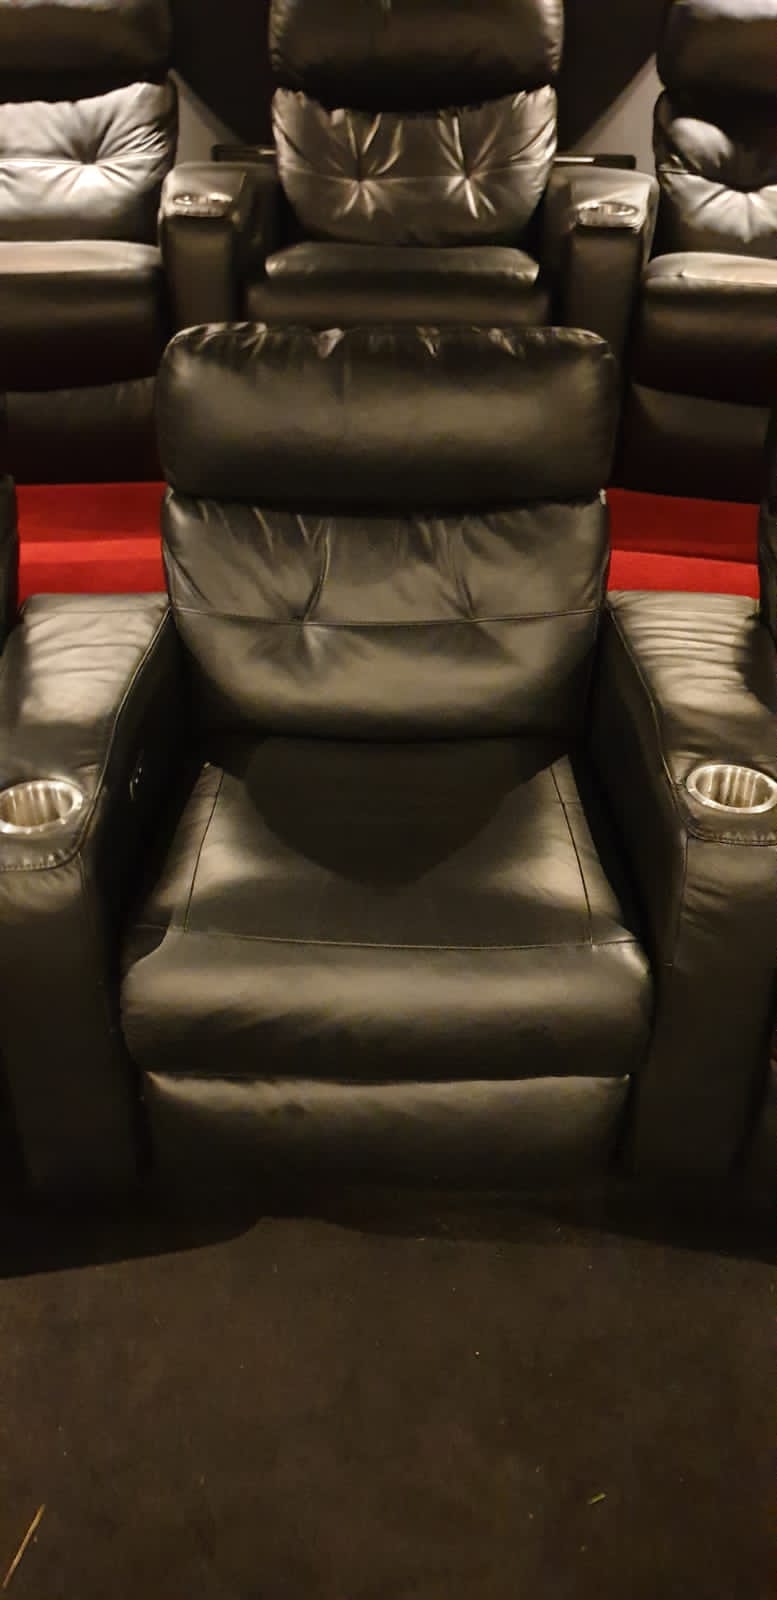 Cleaned cinema seat